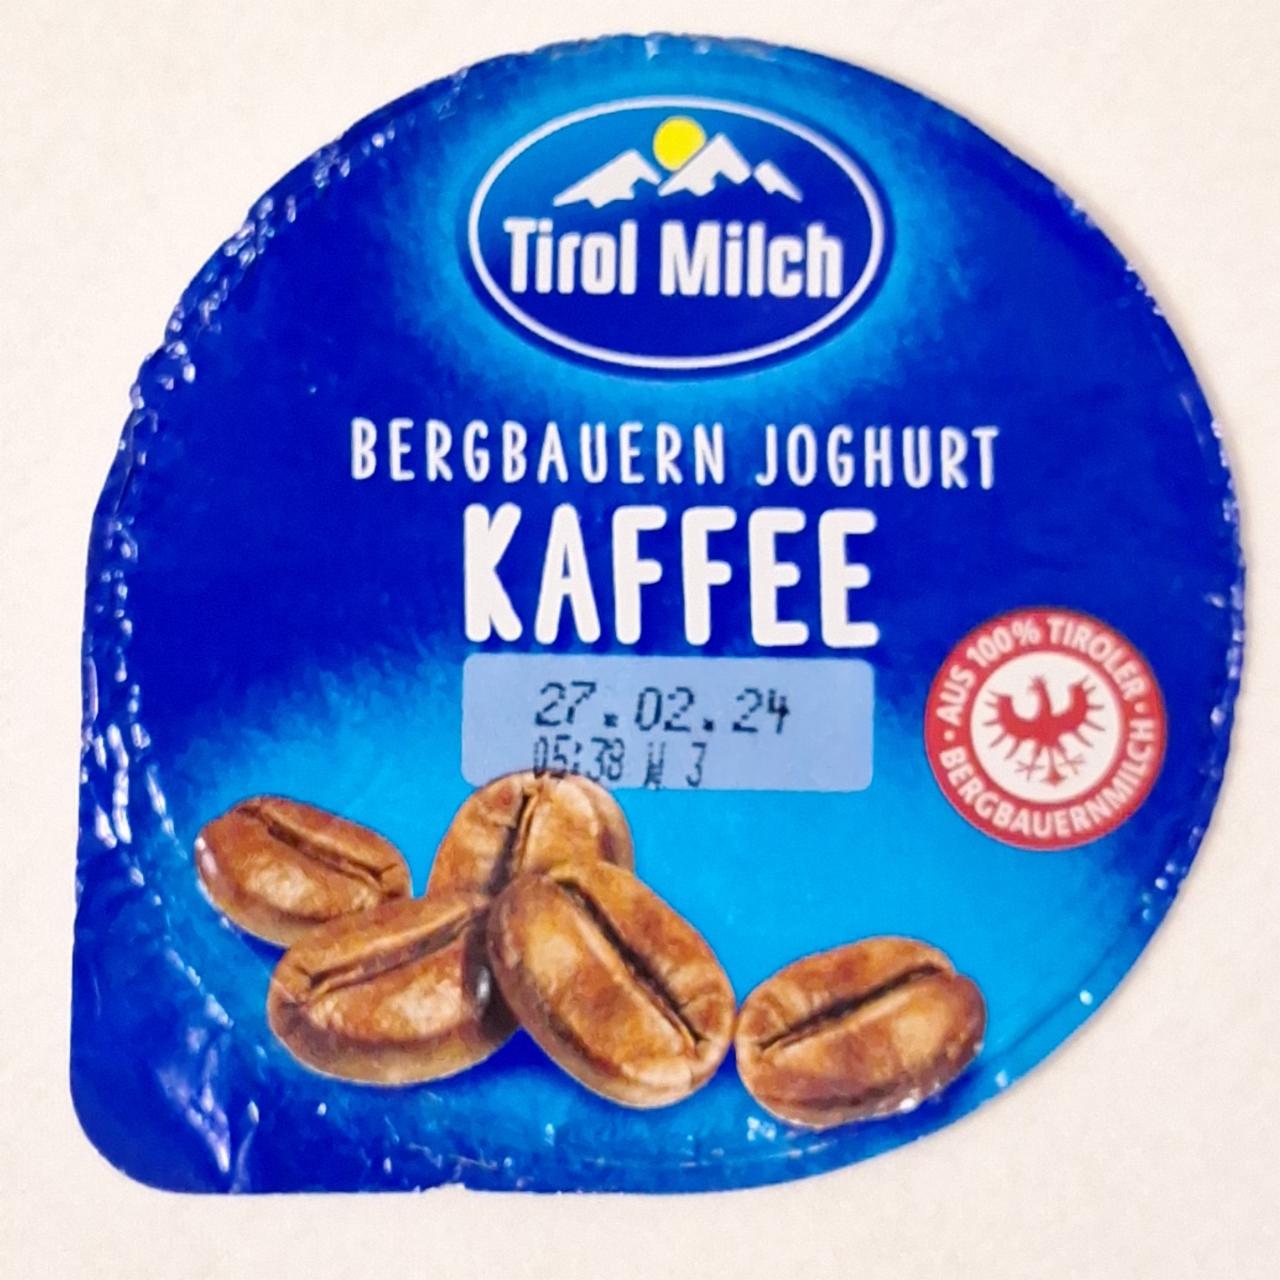 Fotografie - Bergbauern Joghurt Kaffee Tirol Milch